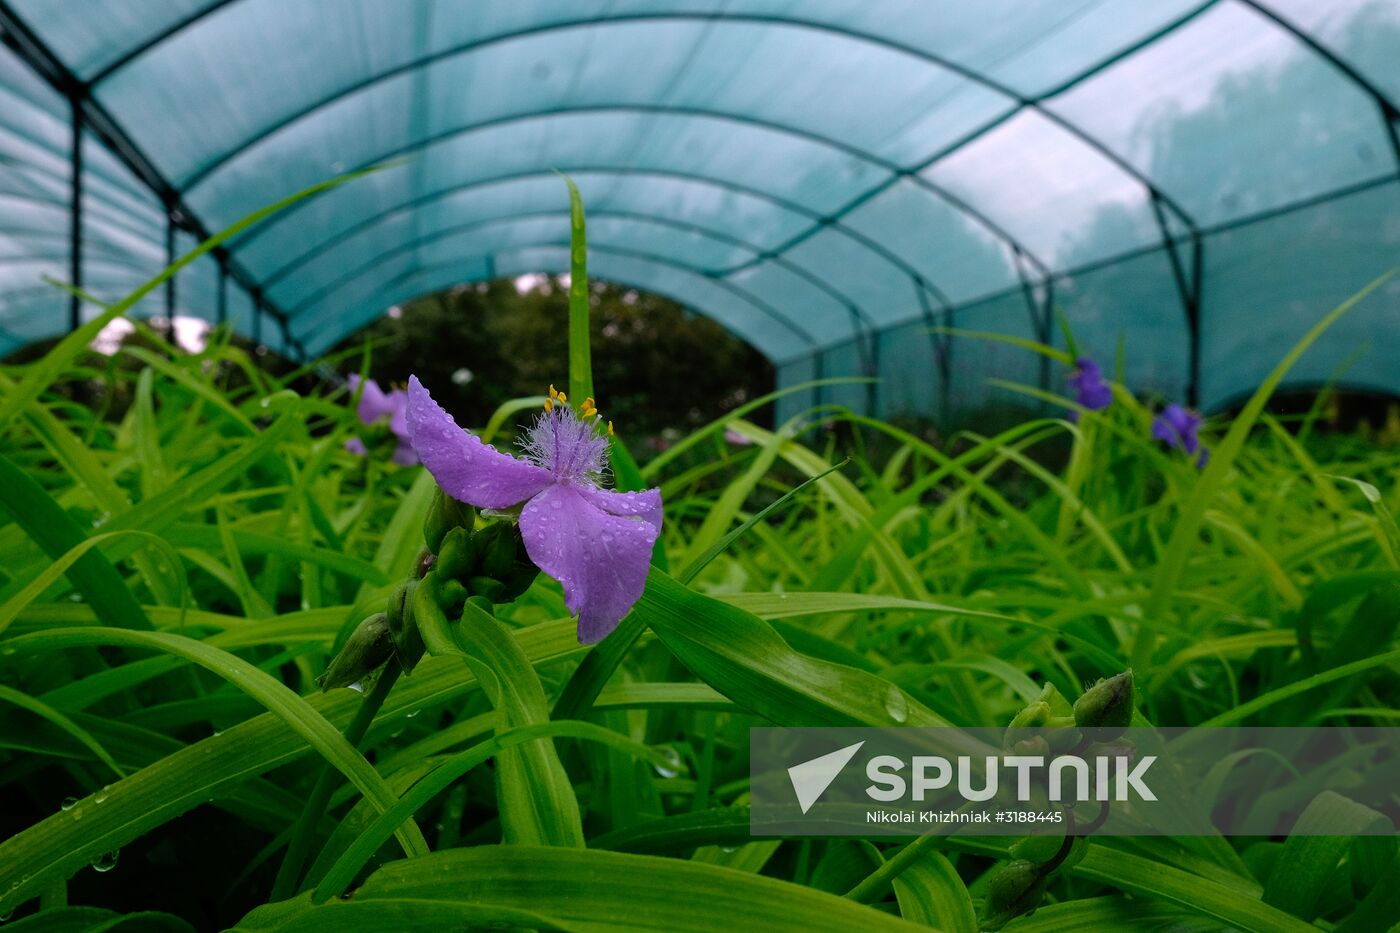 Plant nursery in Krasnodar Territory